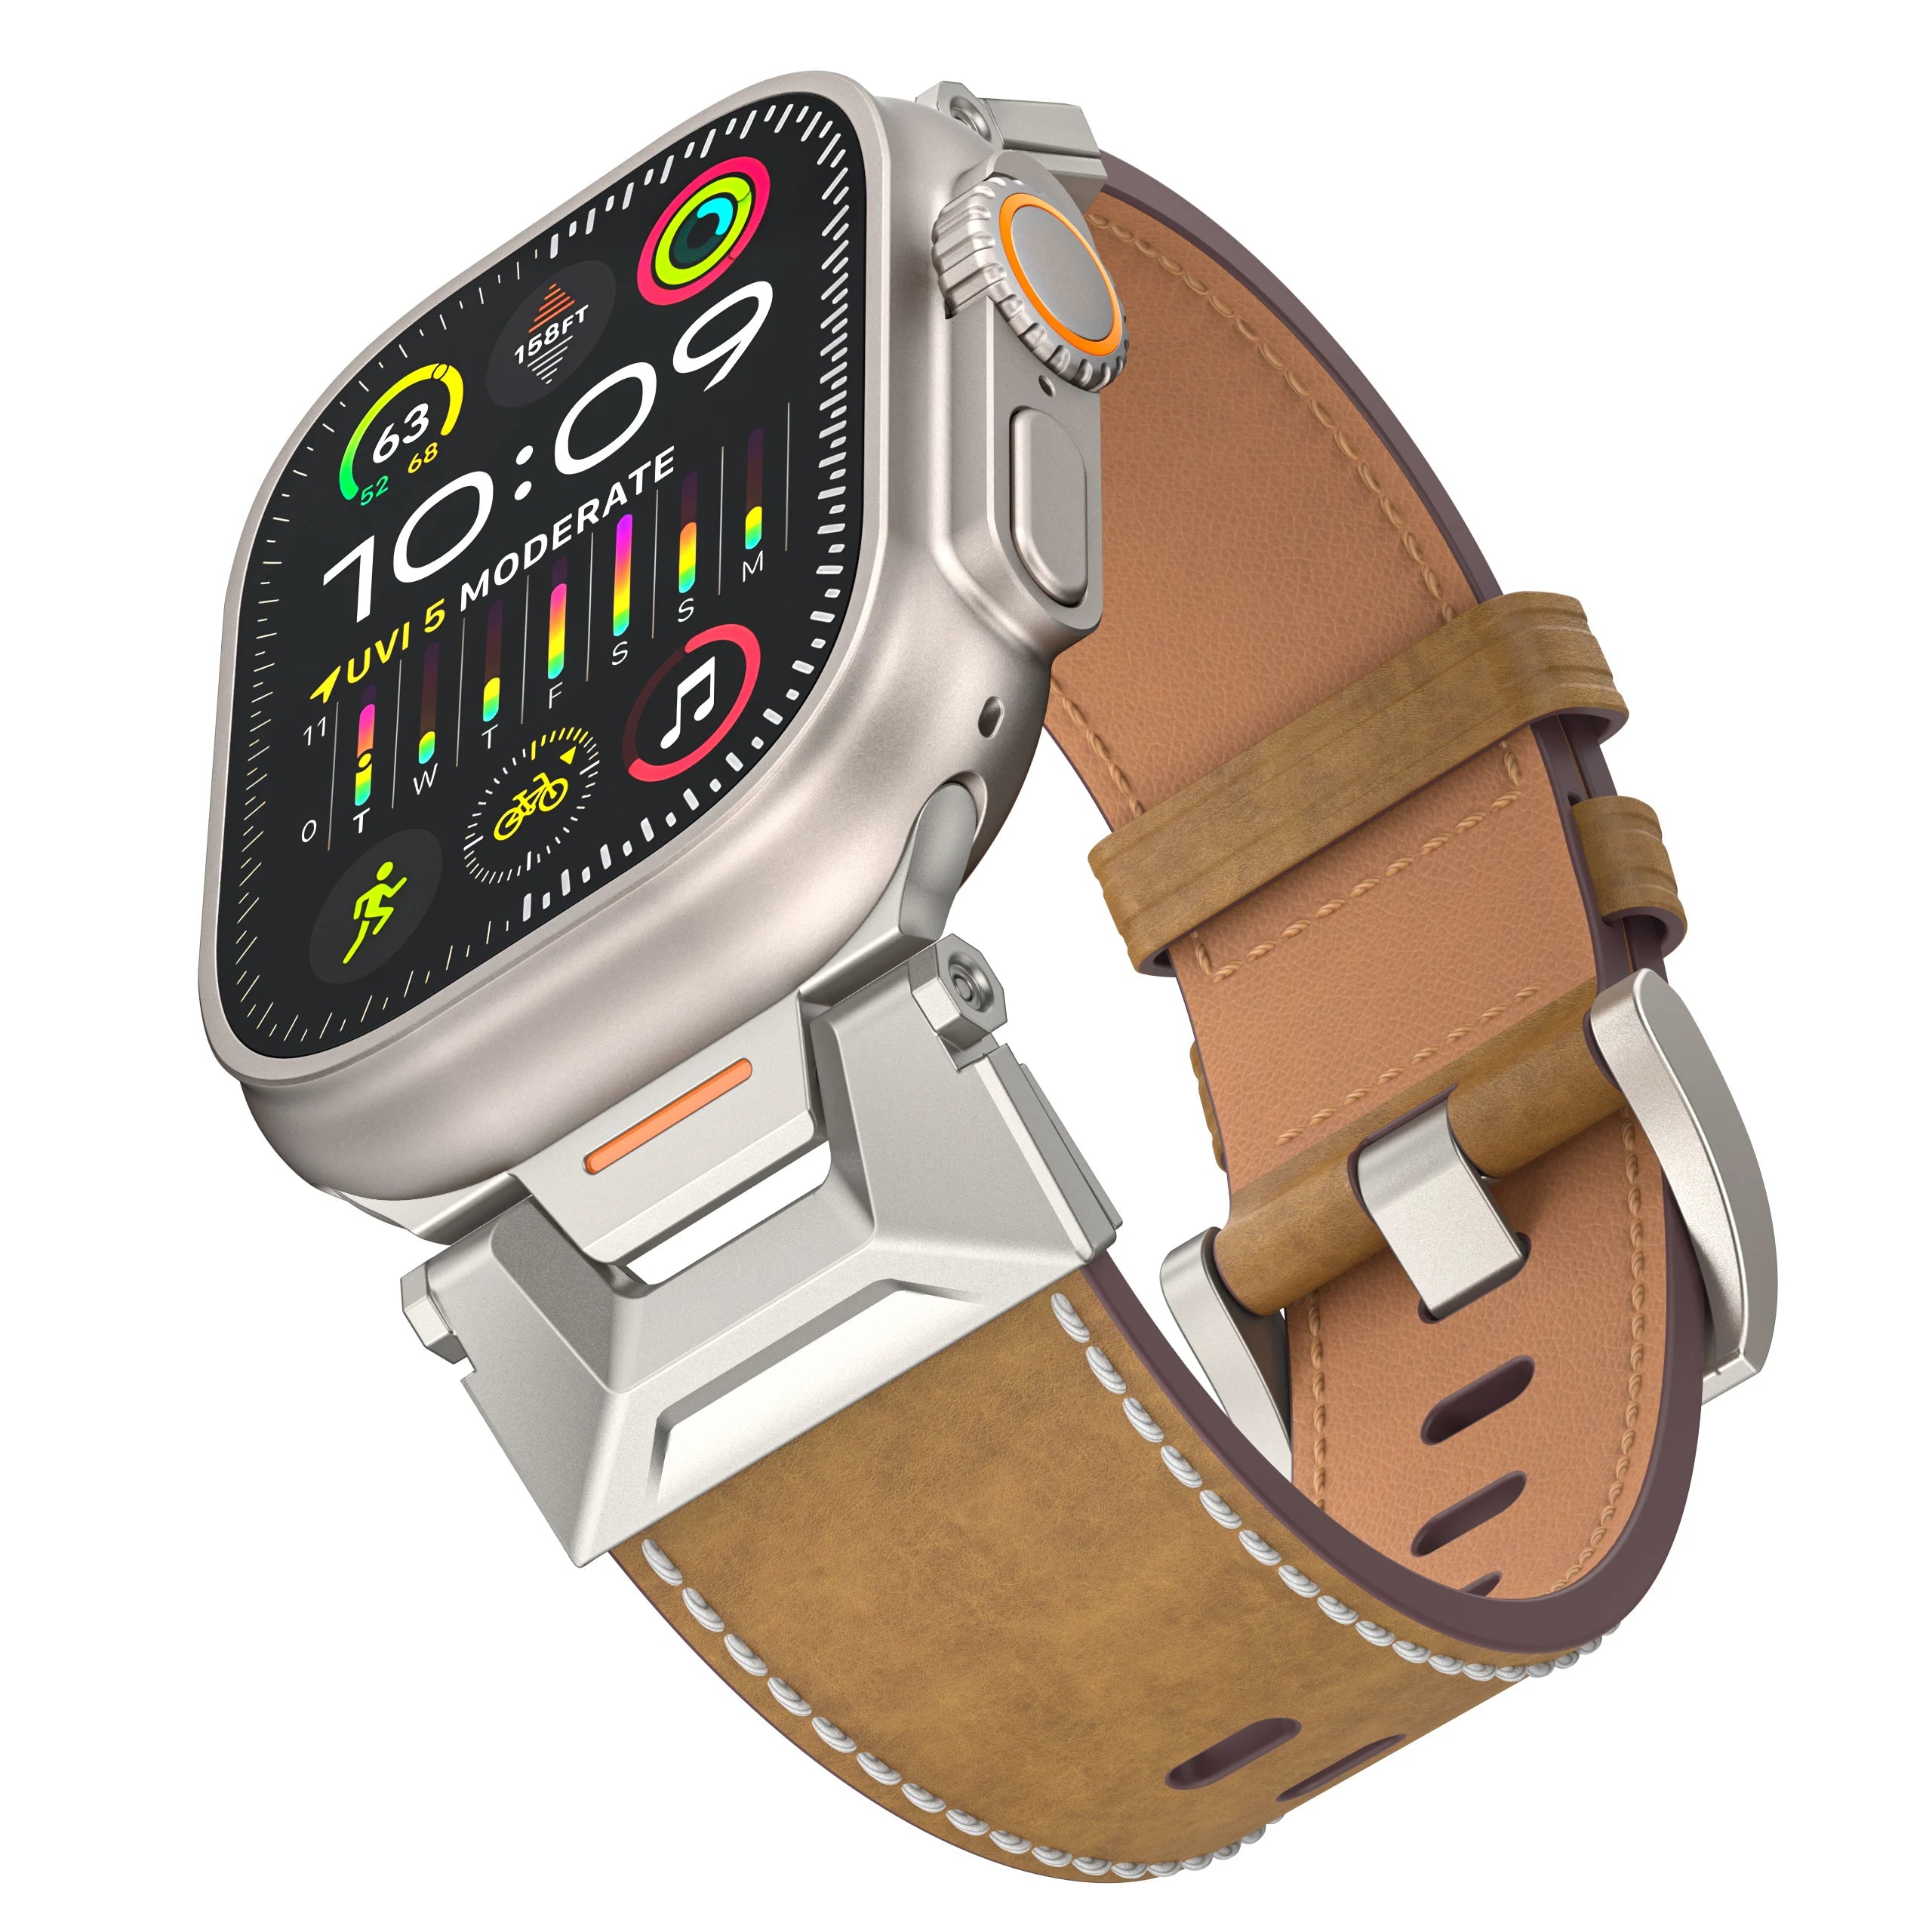 Luxury Leather Strap For Apple Watch By Shoponx. - SHOPONX